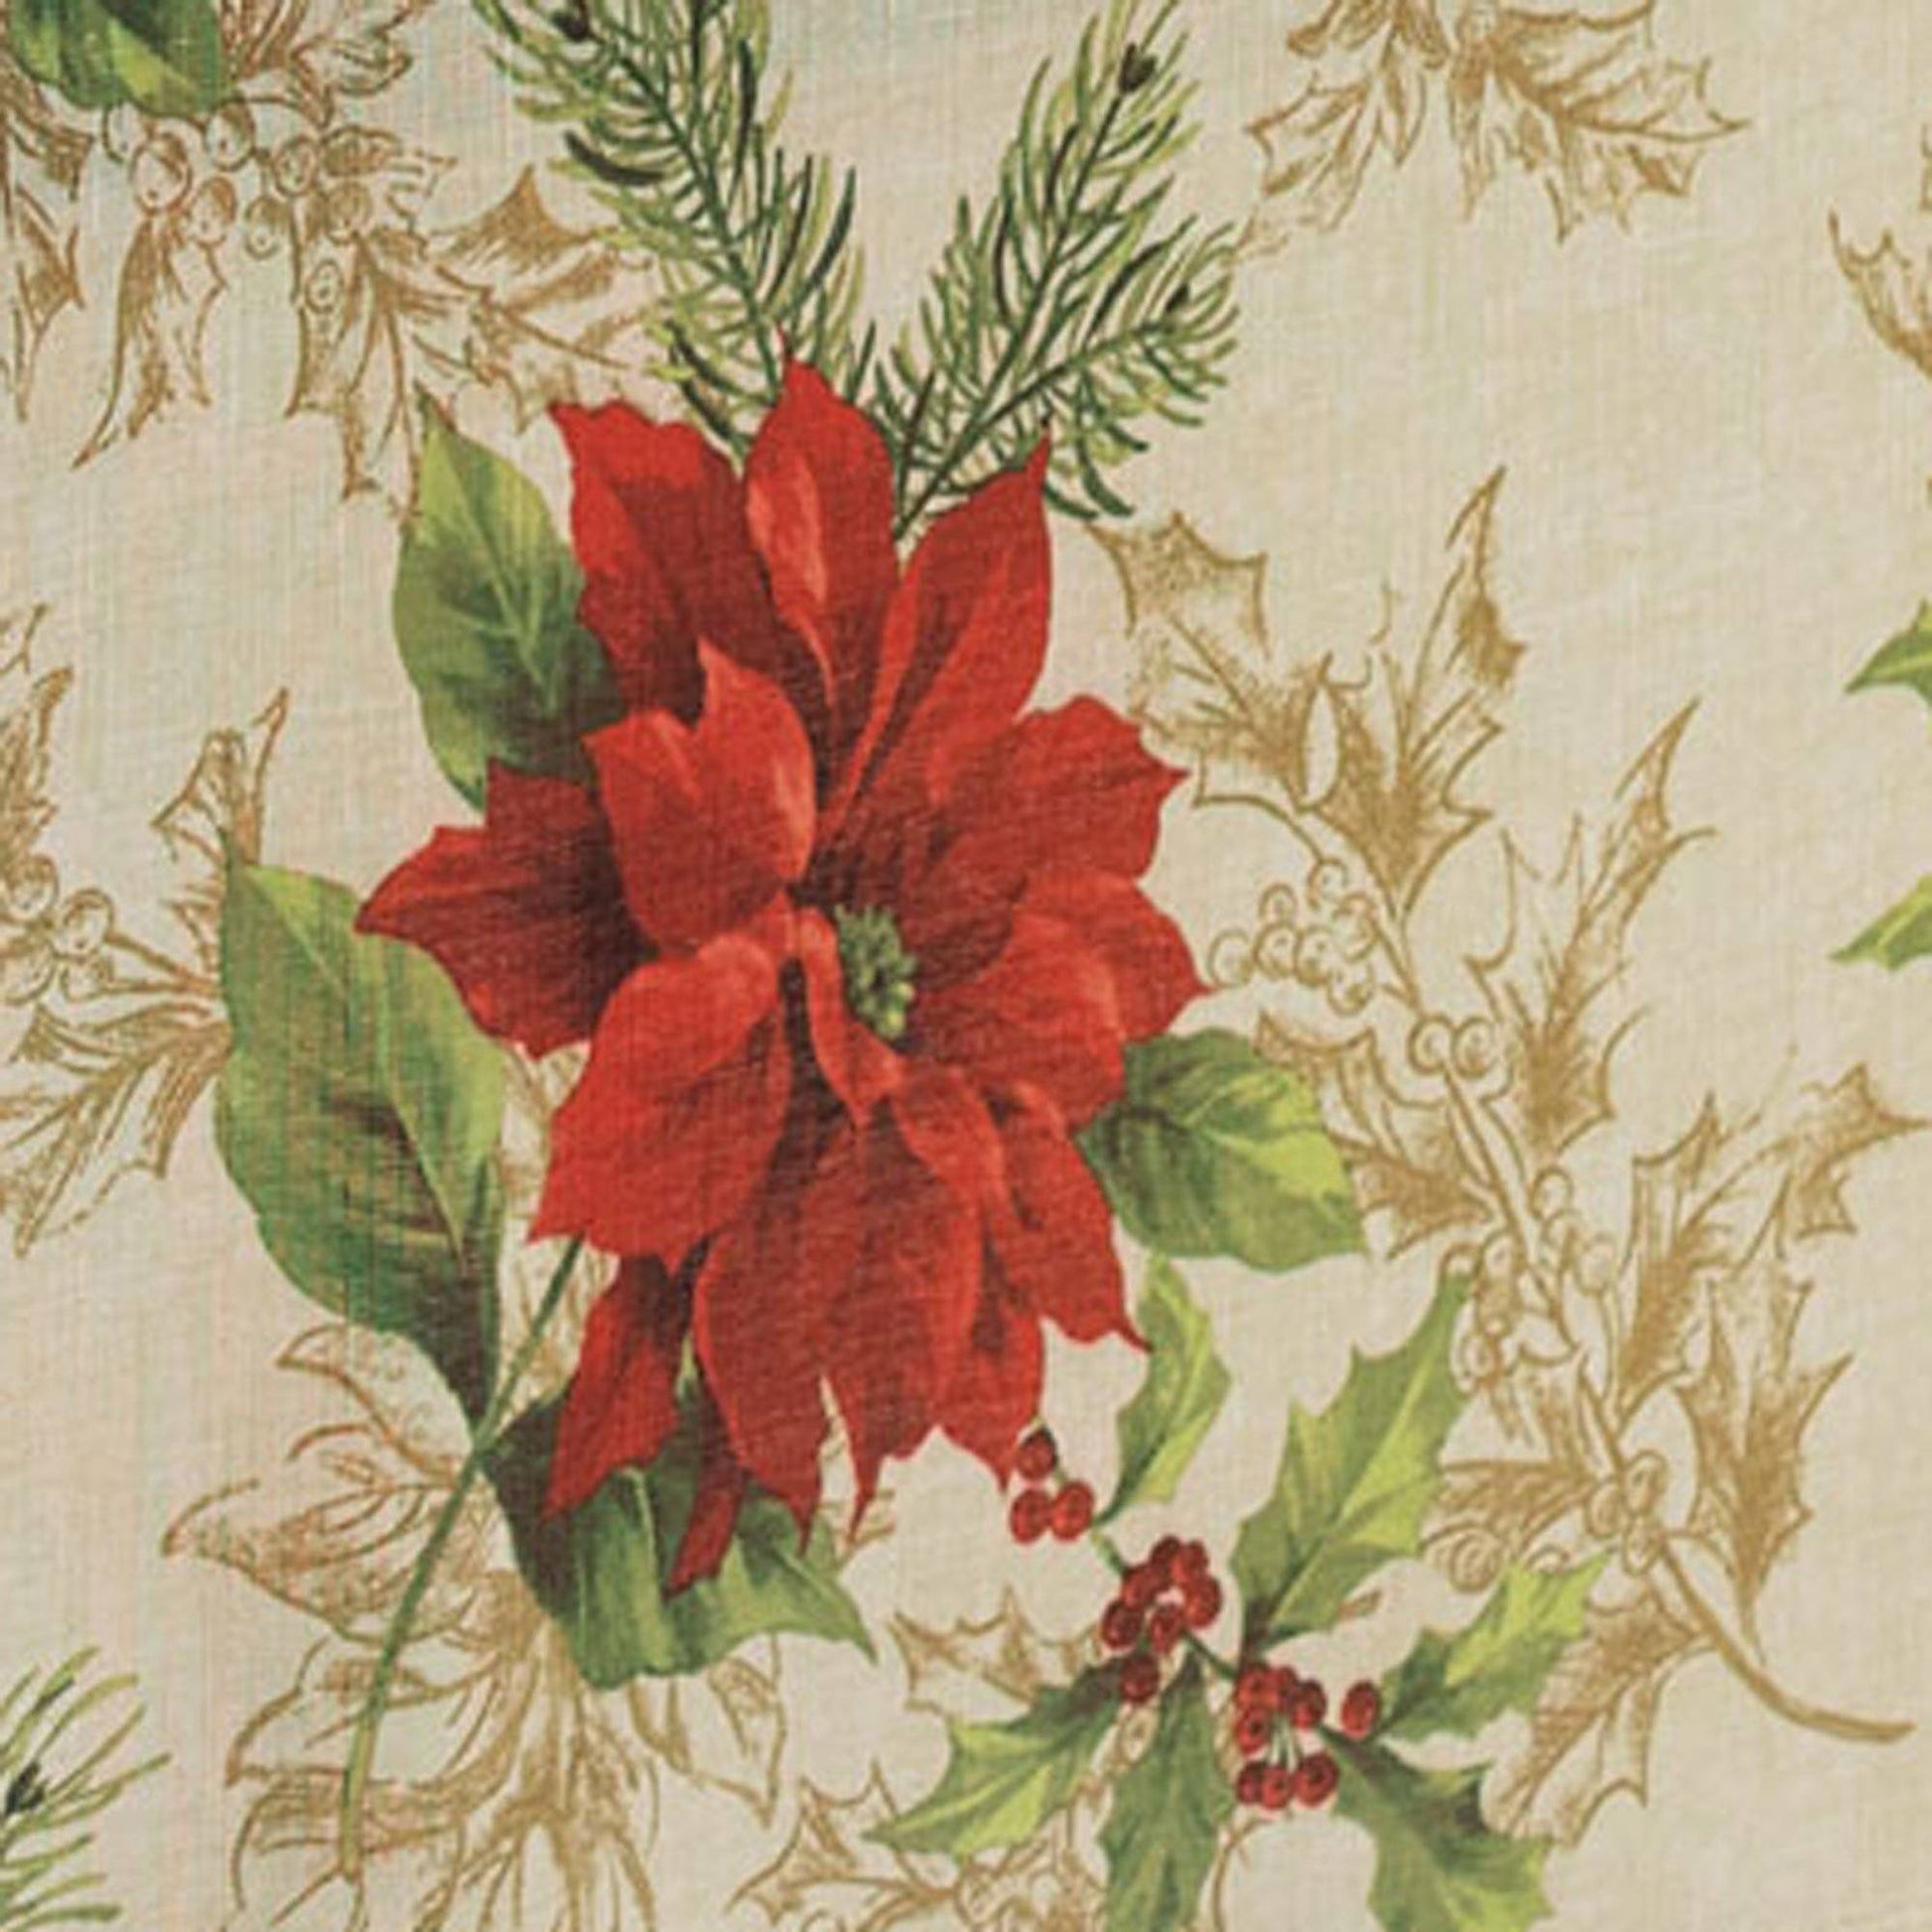 Elrene Elegance Plaid Napkins - Set of 4 Poinsettia Red